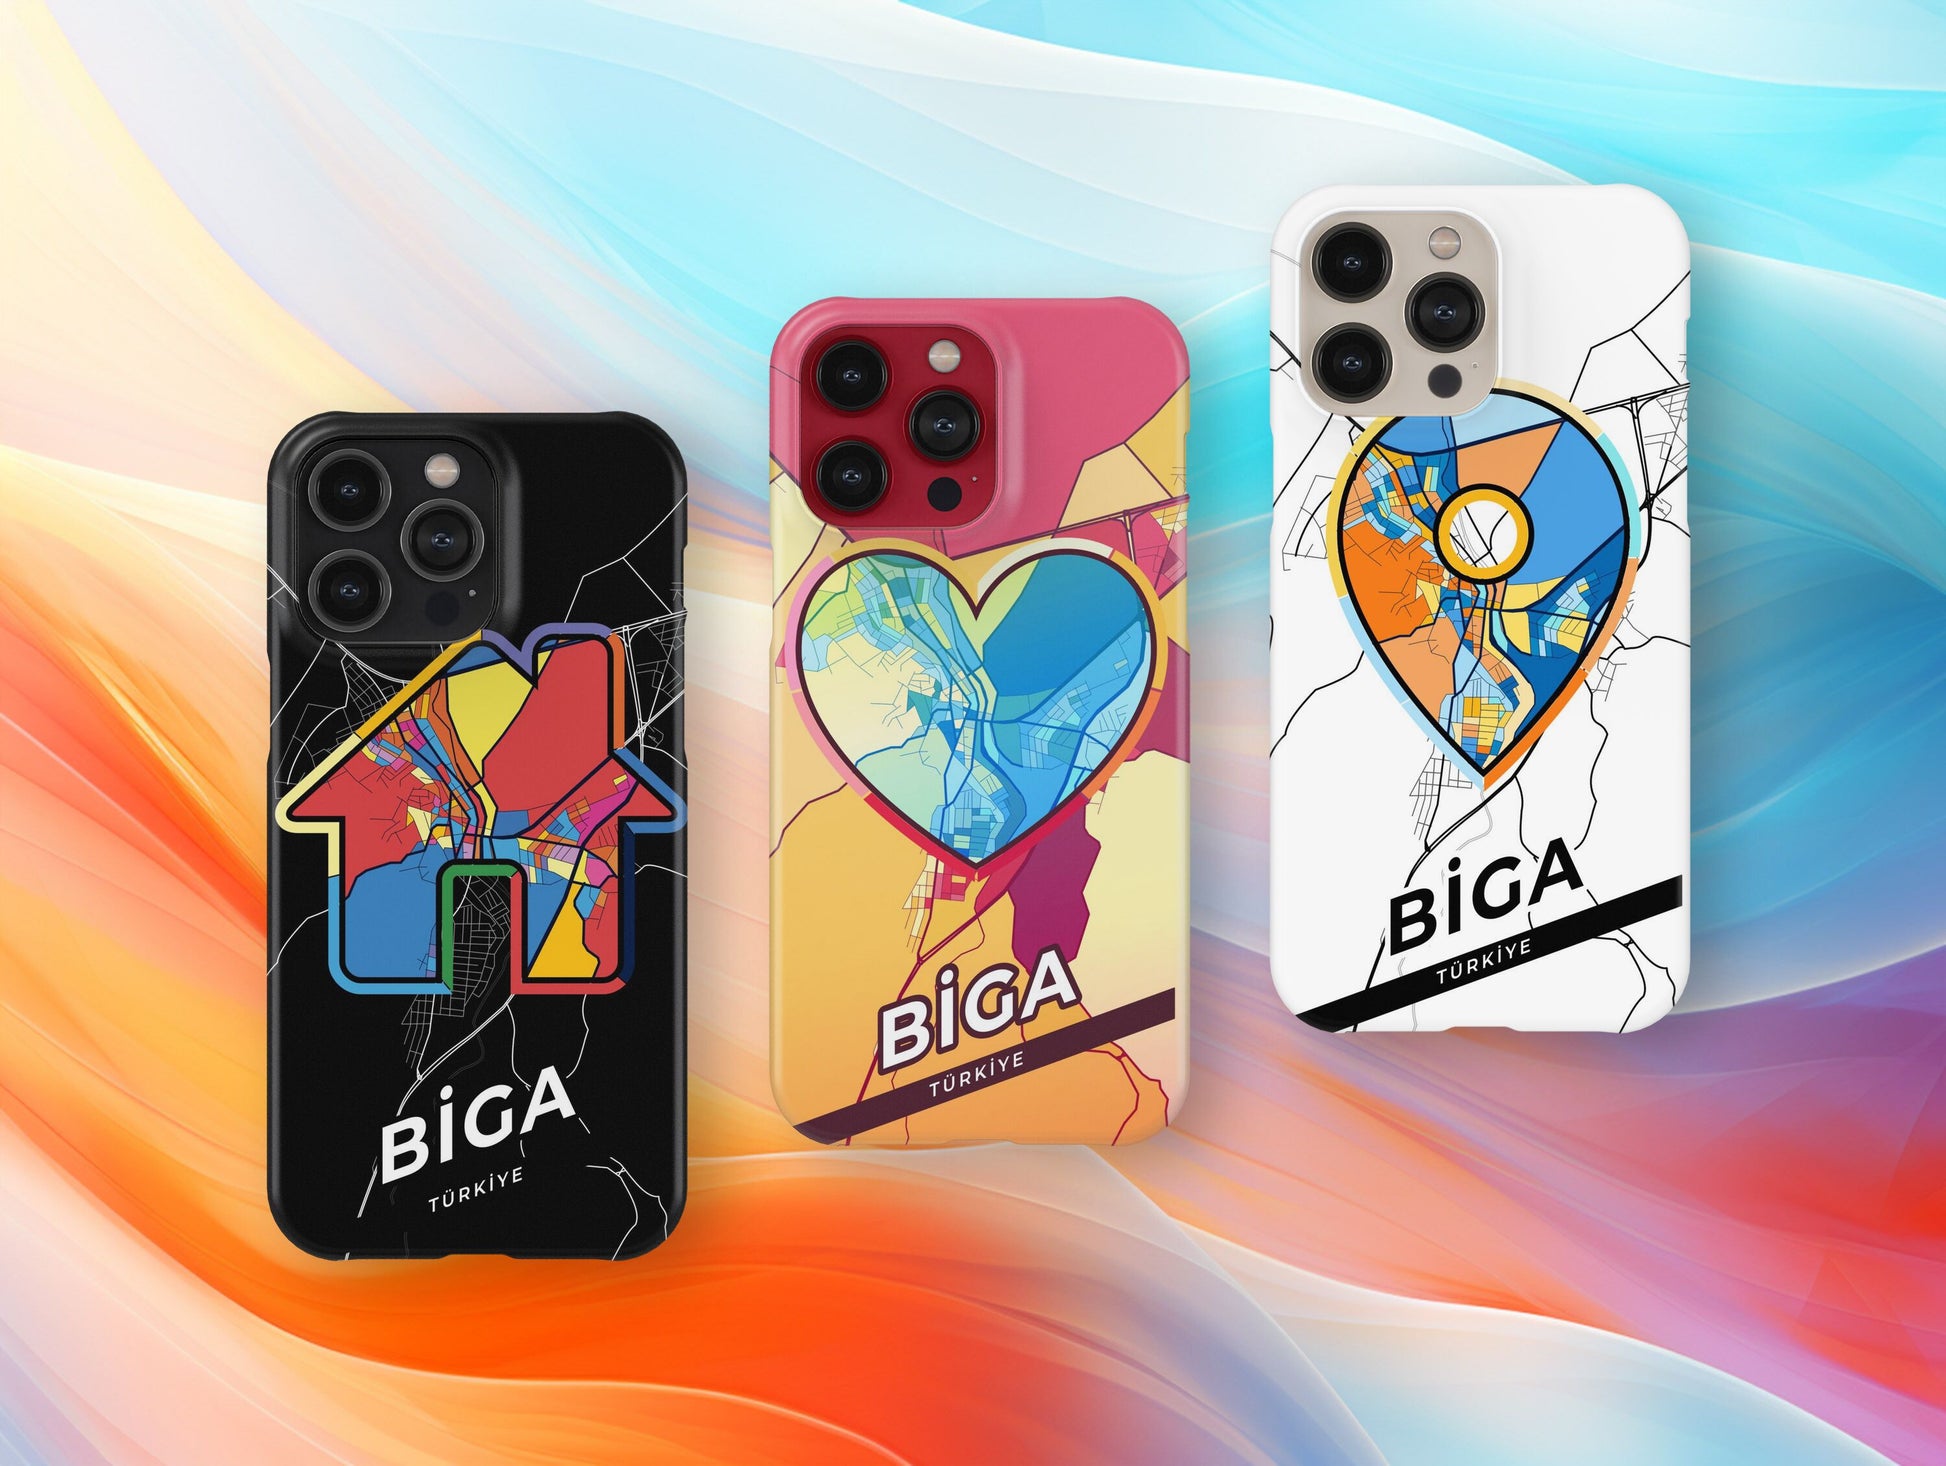 Biga Turkey slim phone case with colorful icon. Birthday, wedding or housewarming gift. Couple match cases.